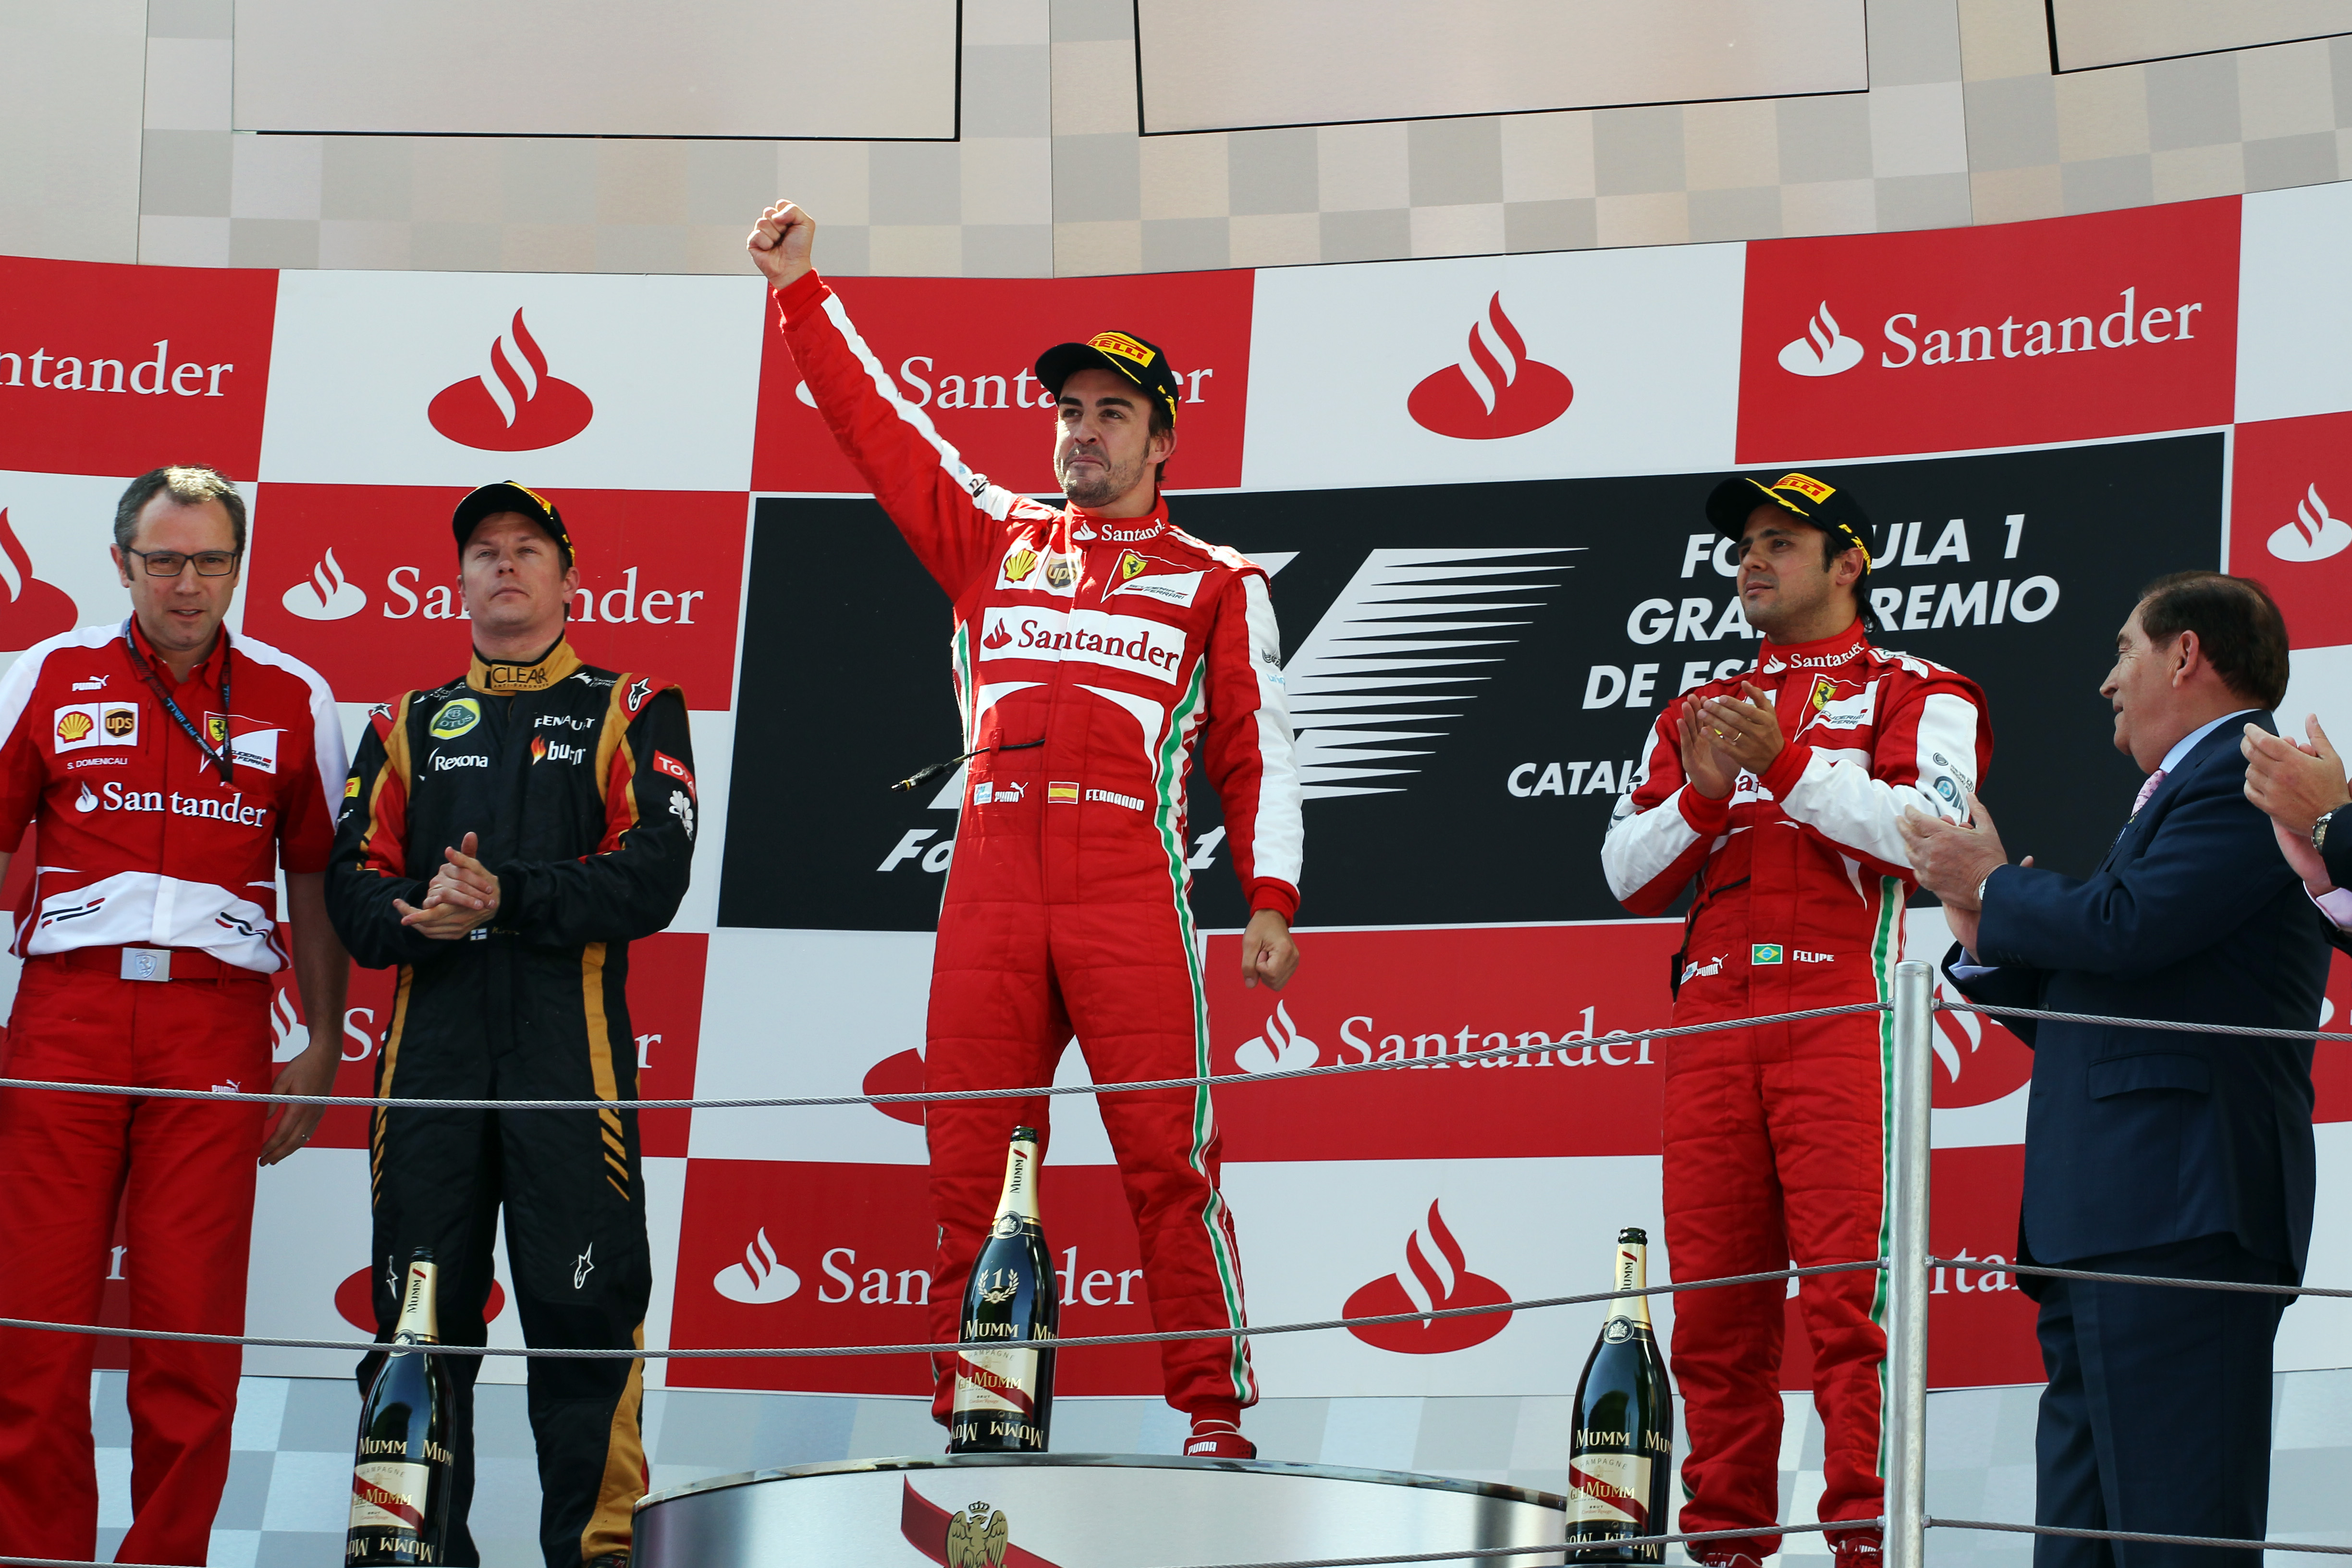 Race: Fernando Alonso wint ‘zijn’ Grand Prix van Spanje